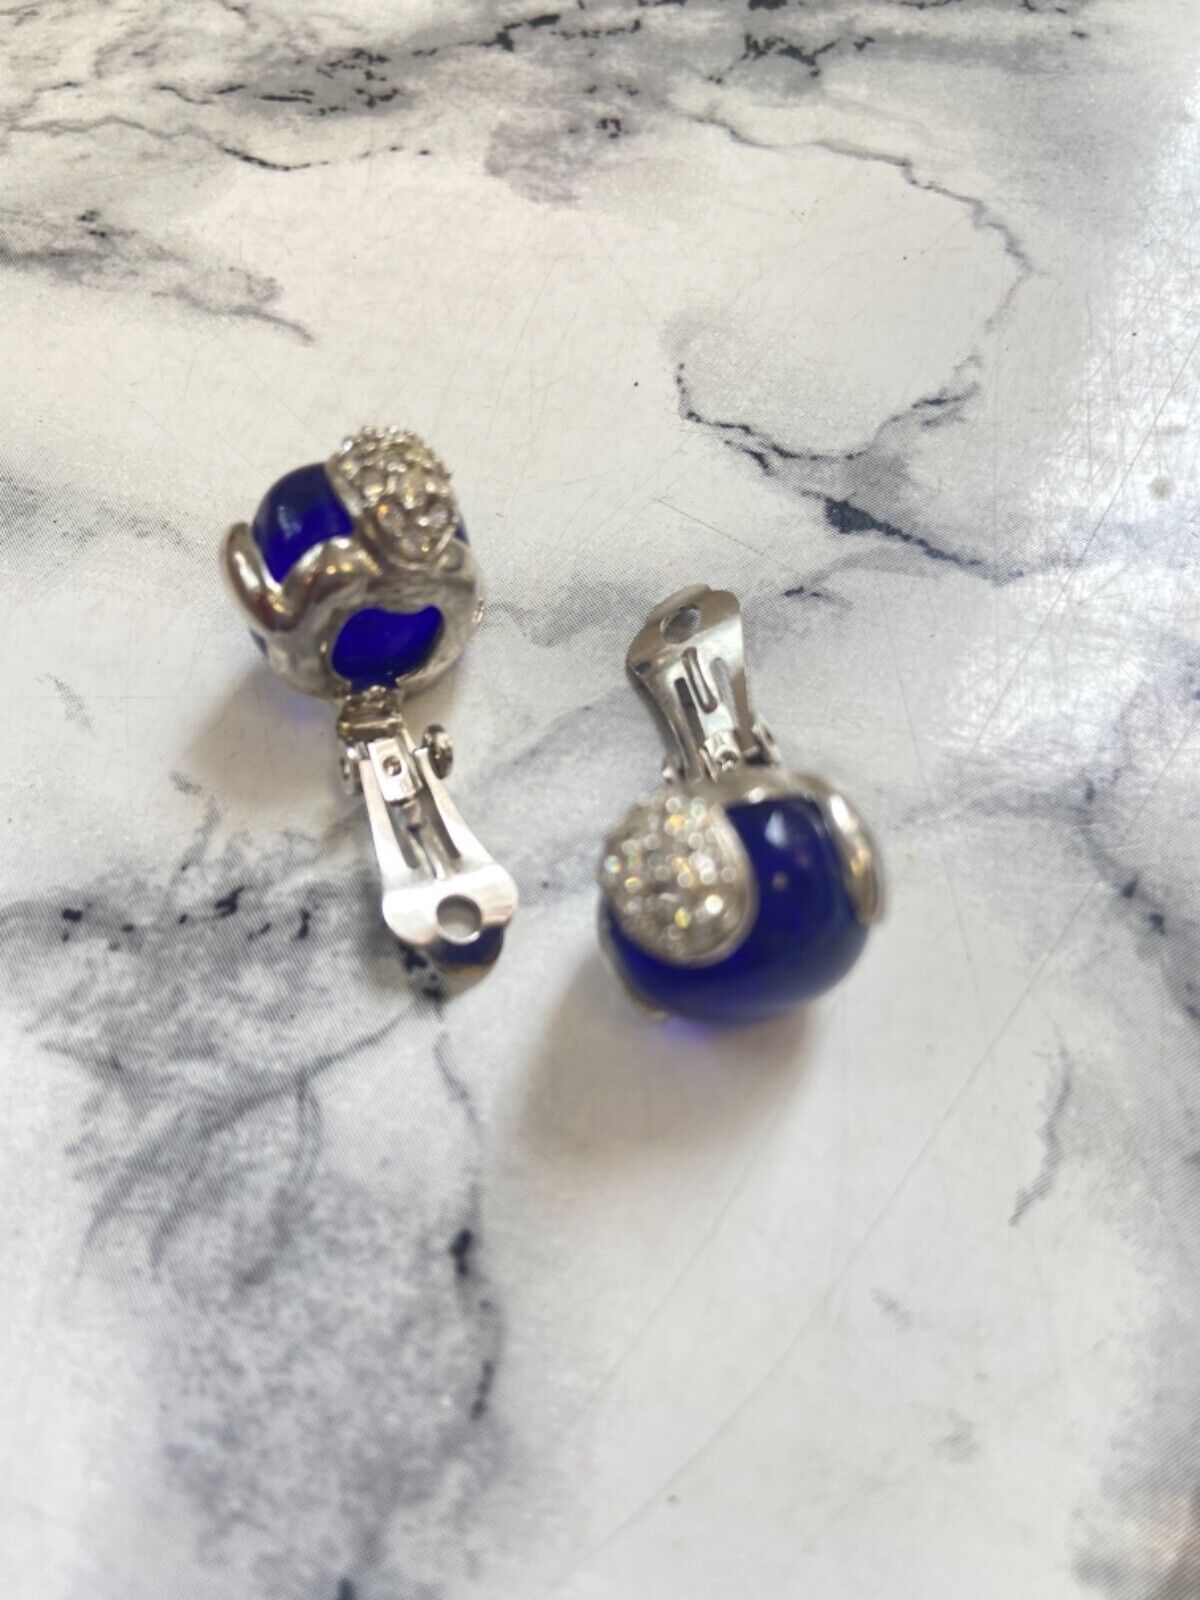 Vintage earrings - blue stone